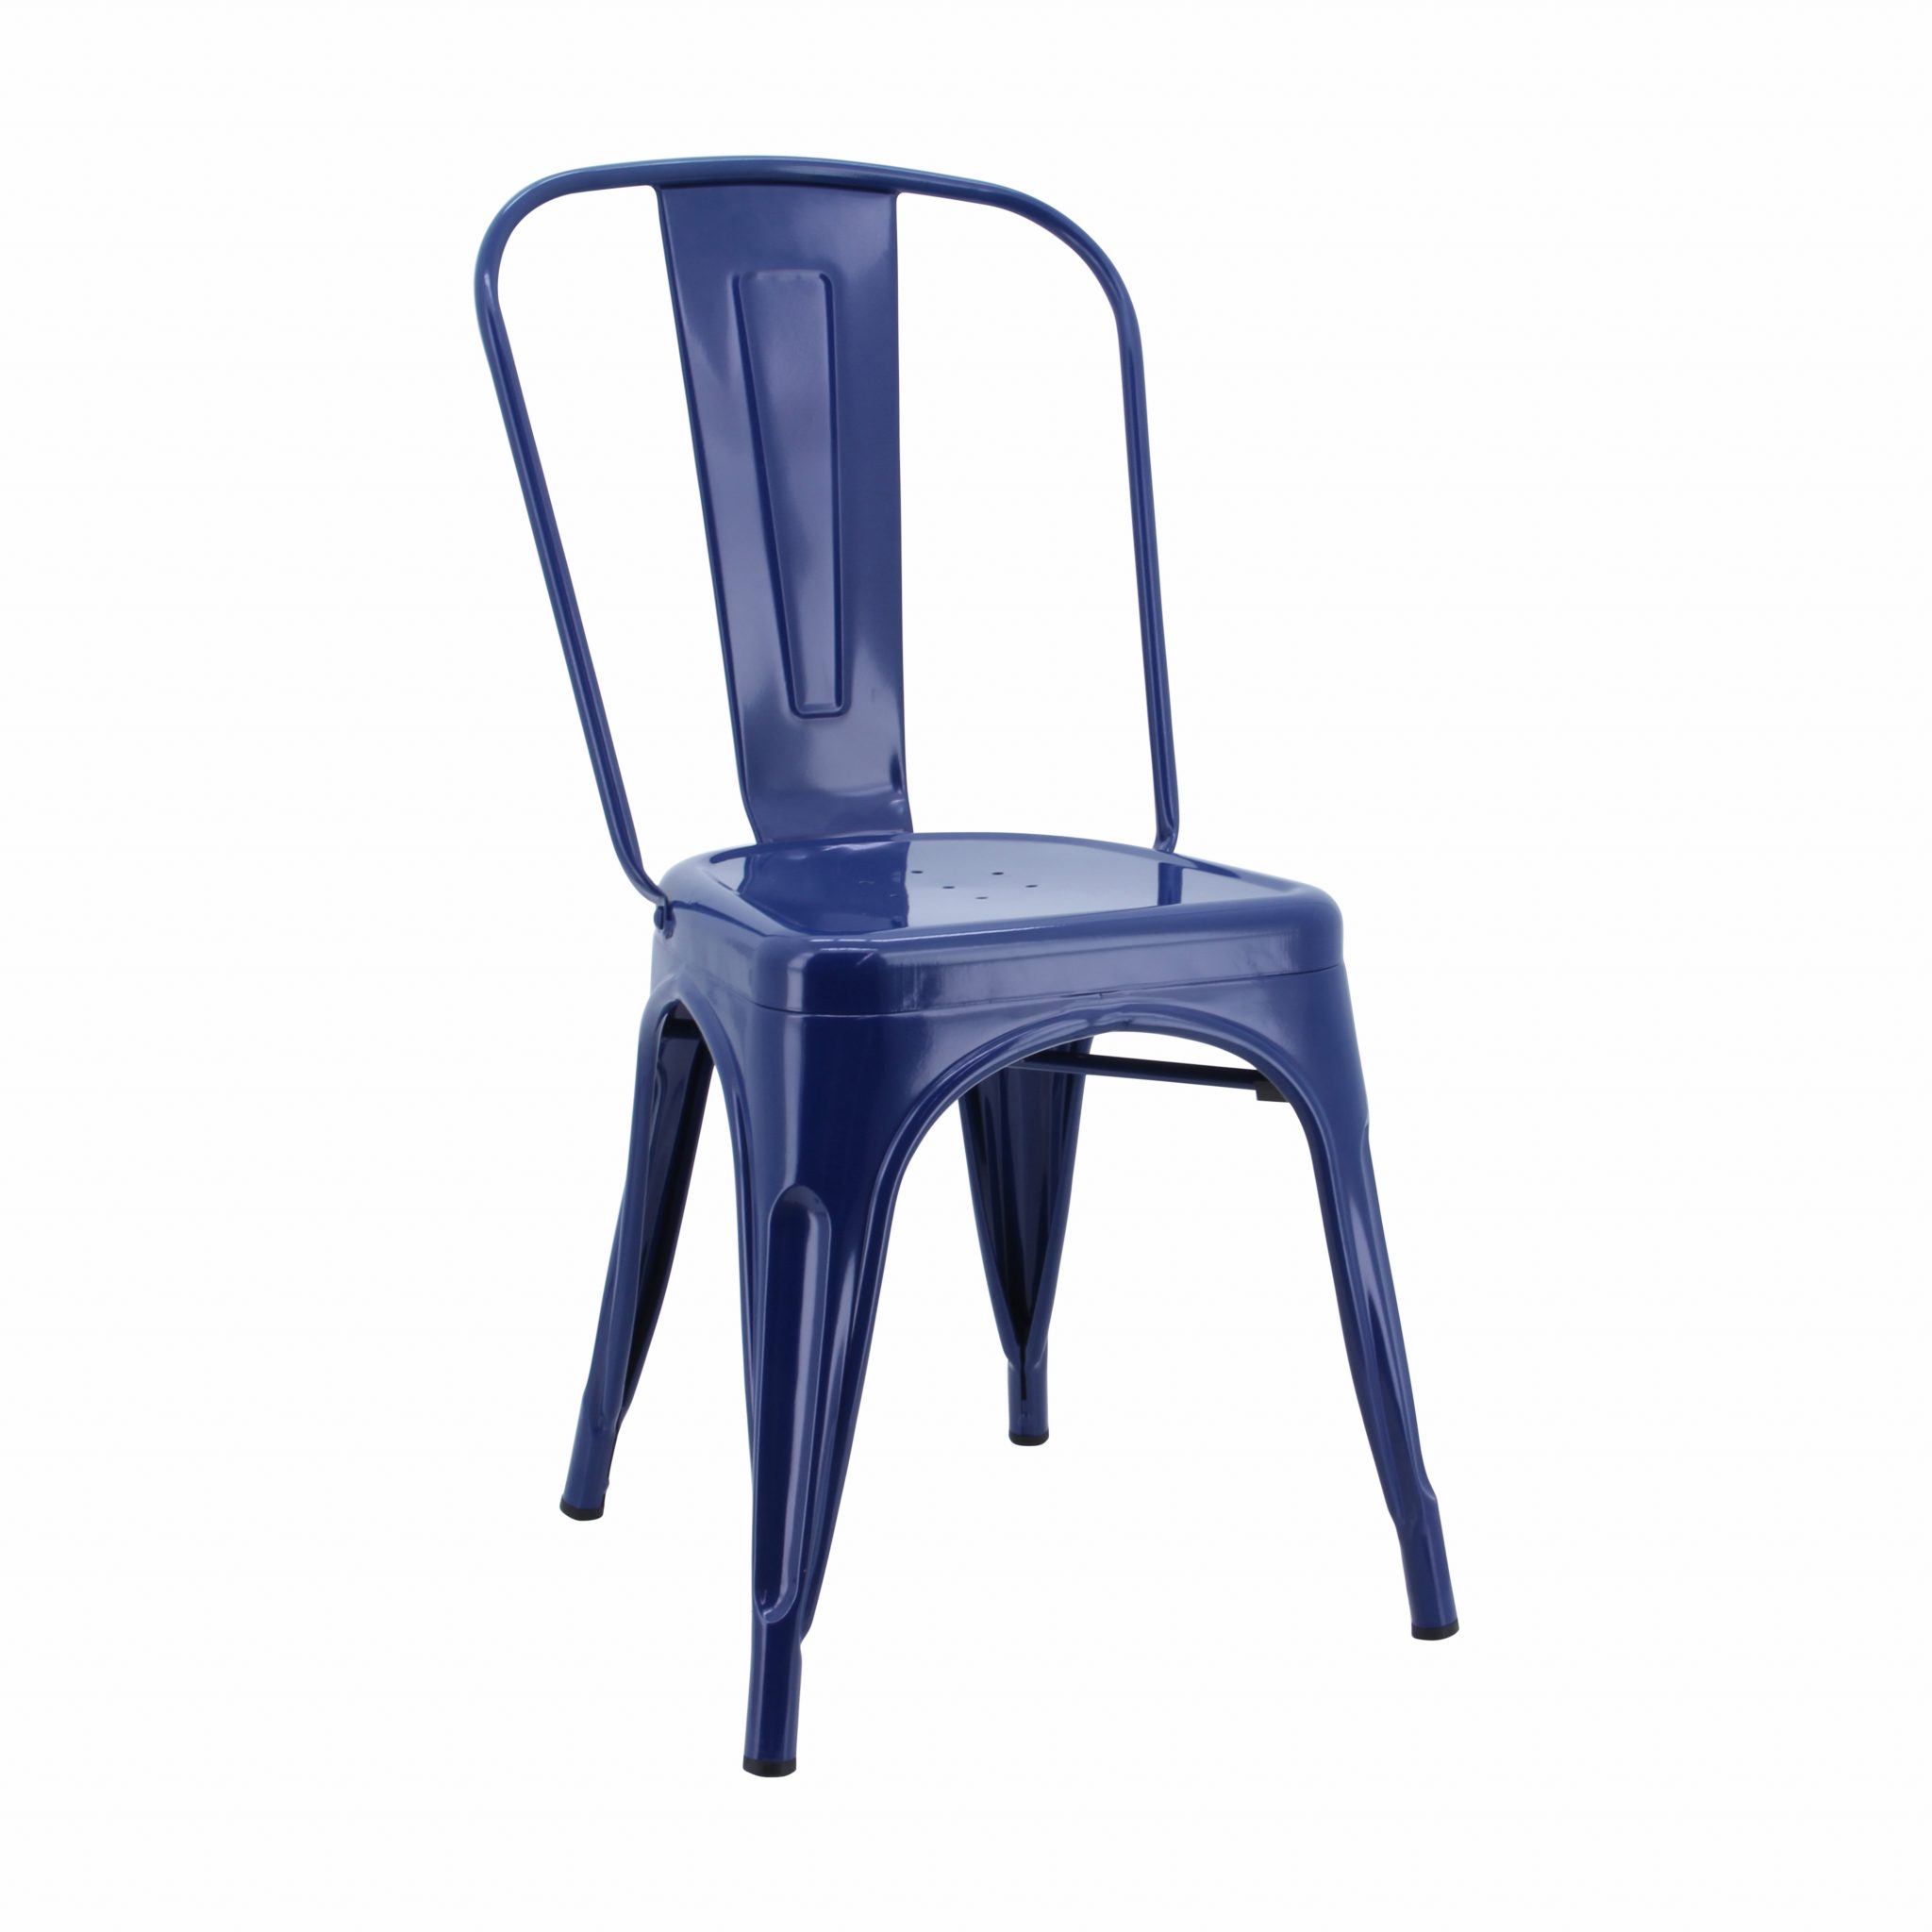 Replica Tolix Chair in Gloss Navy Blue | Cafe Furniture Brisbane